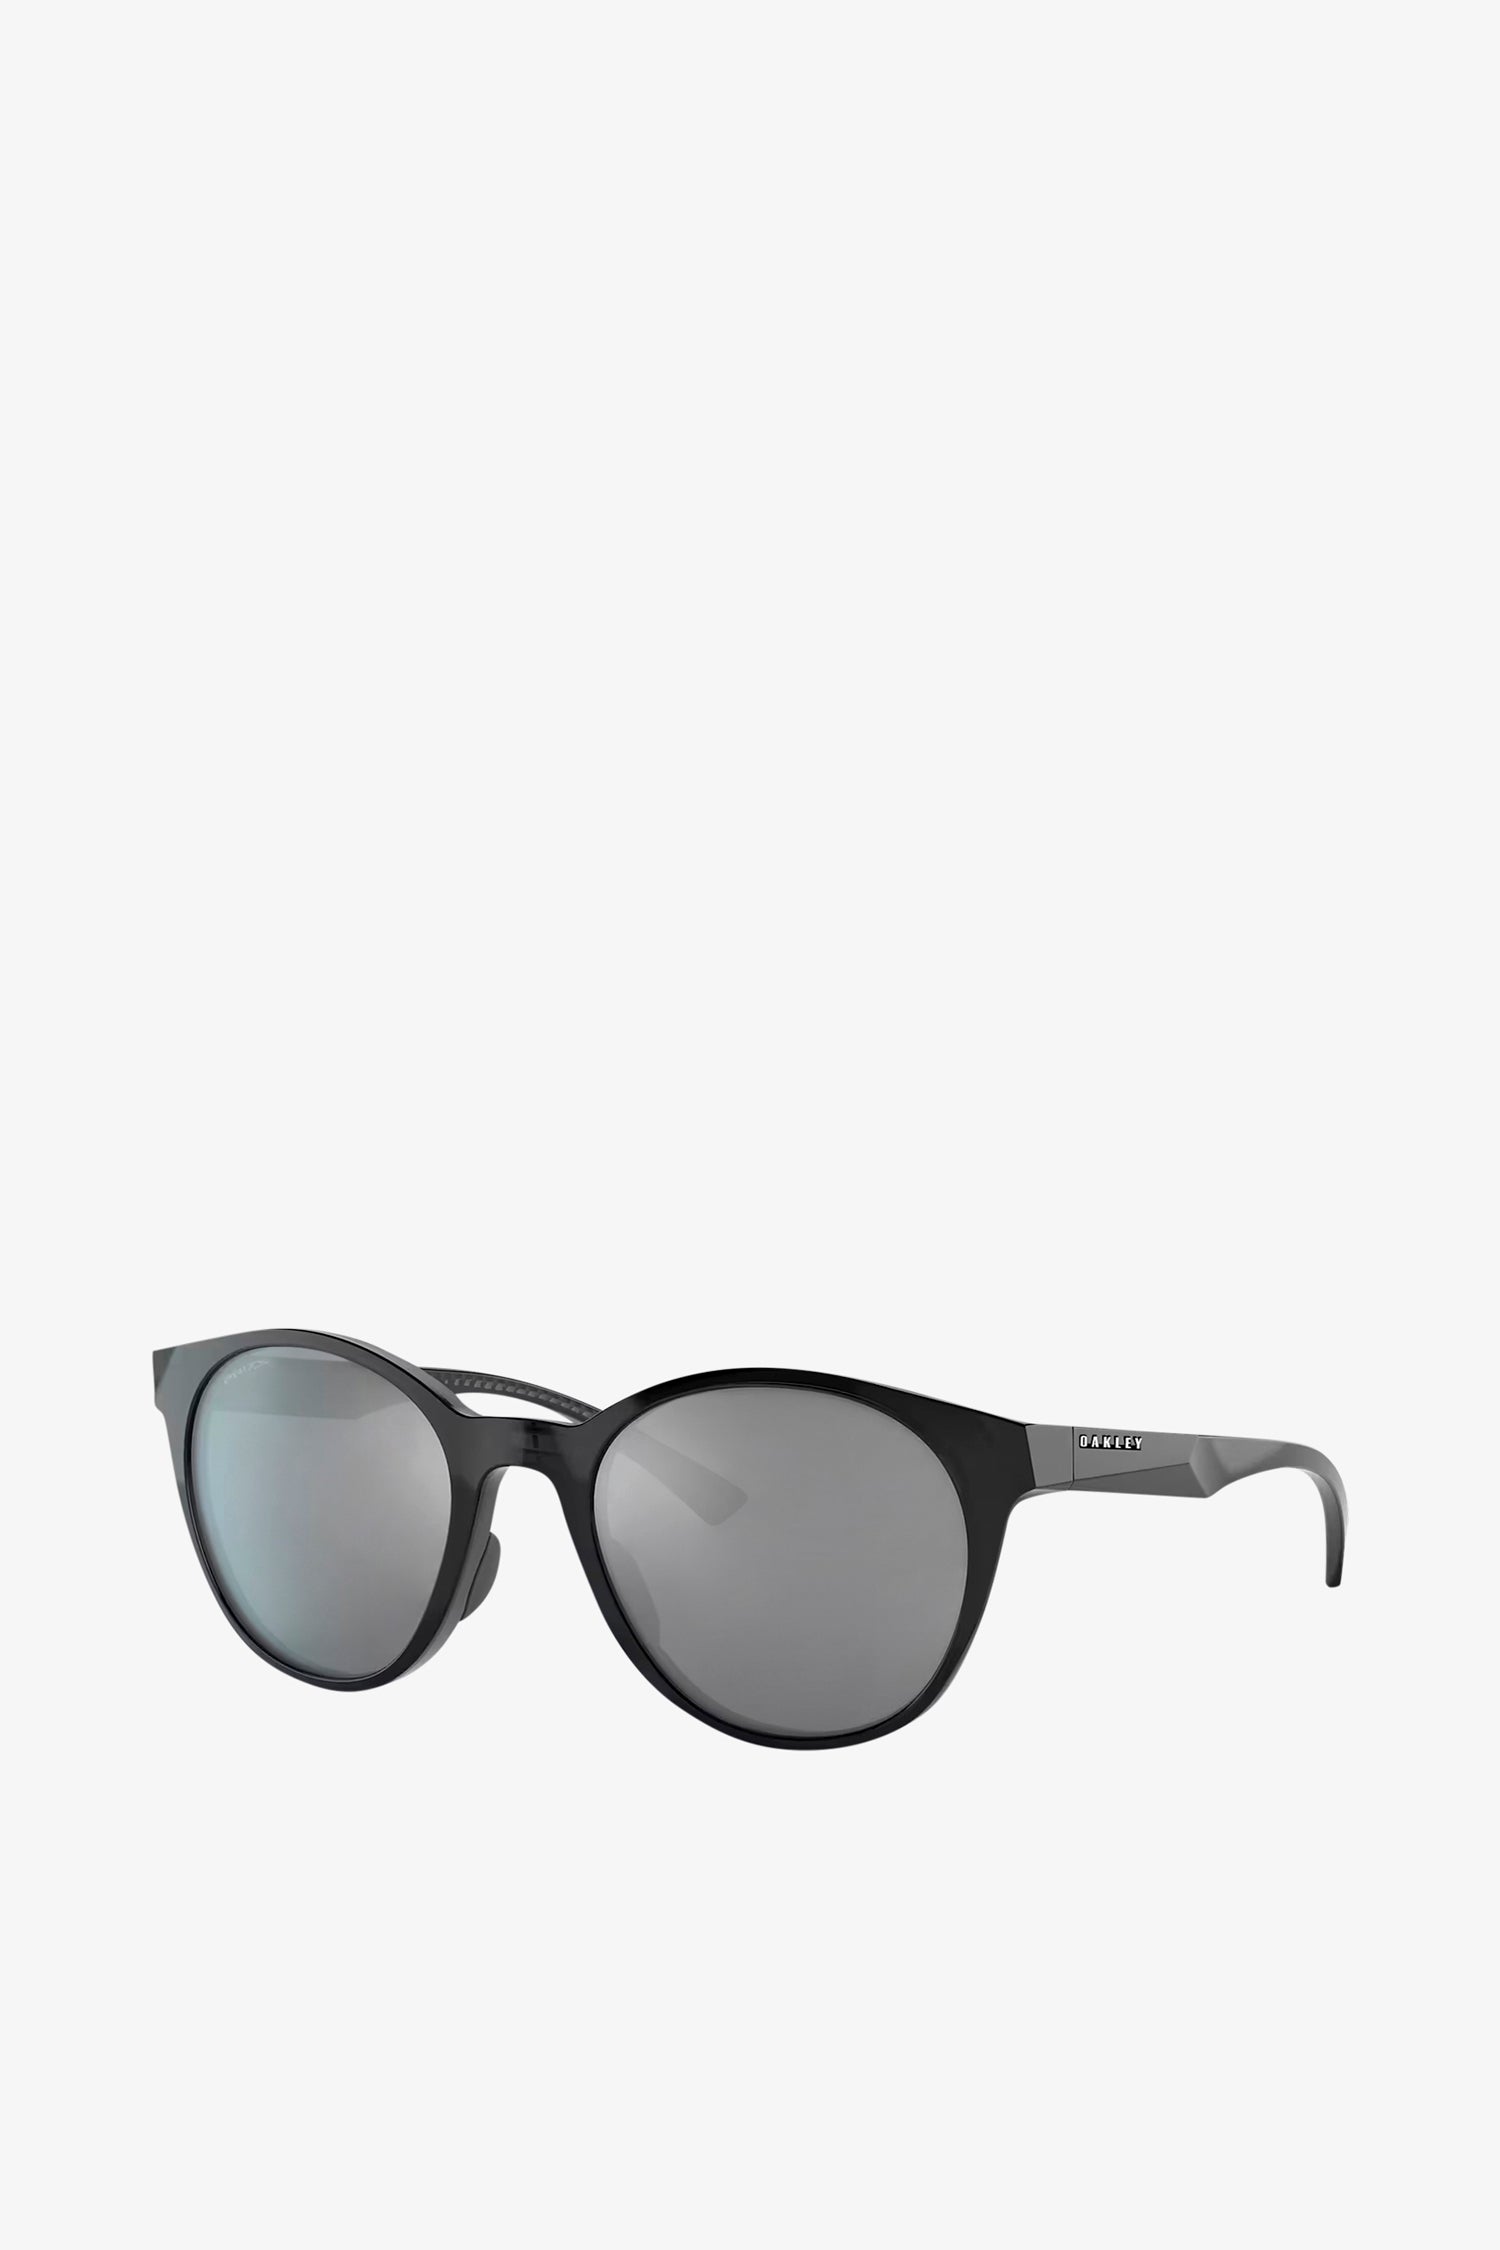 Sprindrift Sunglasses- Selectshop FRAME